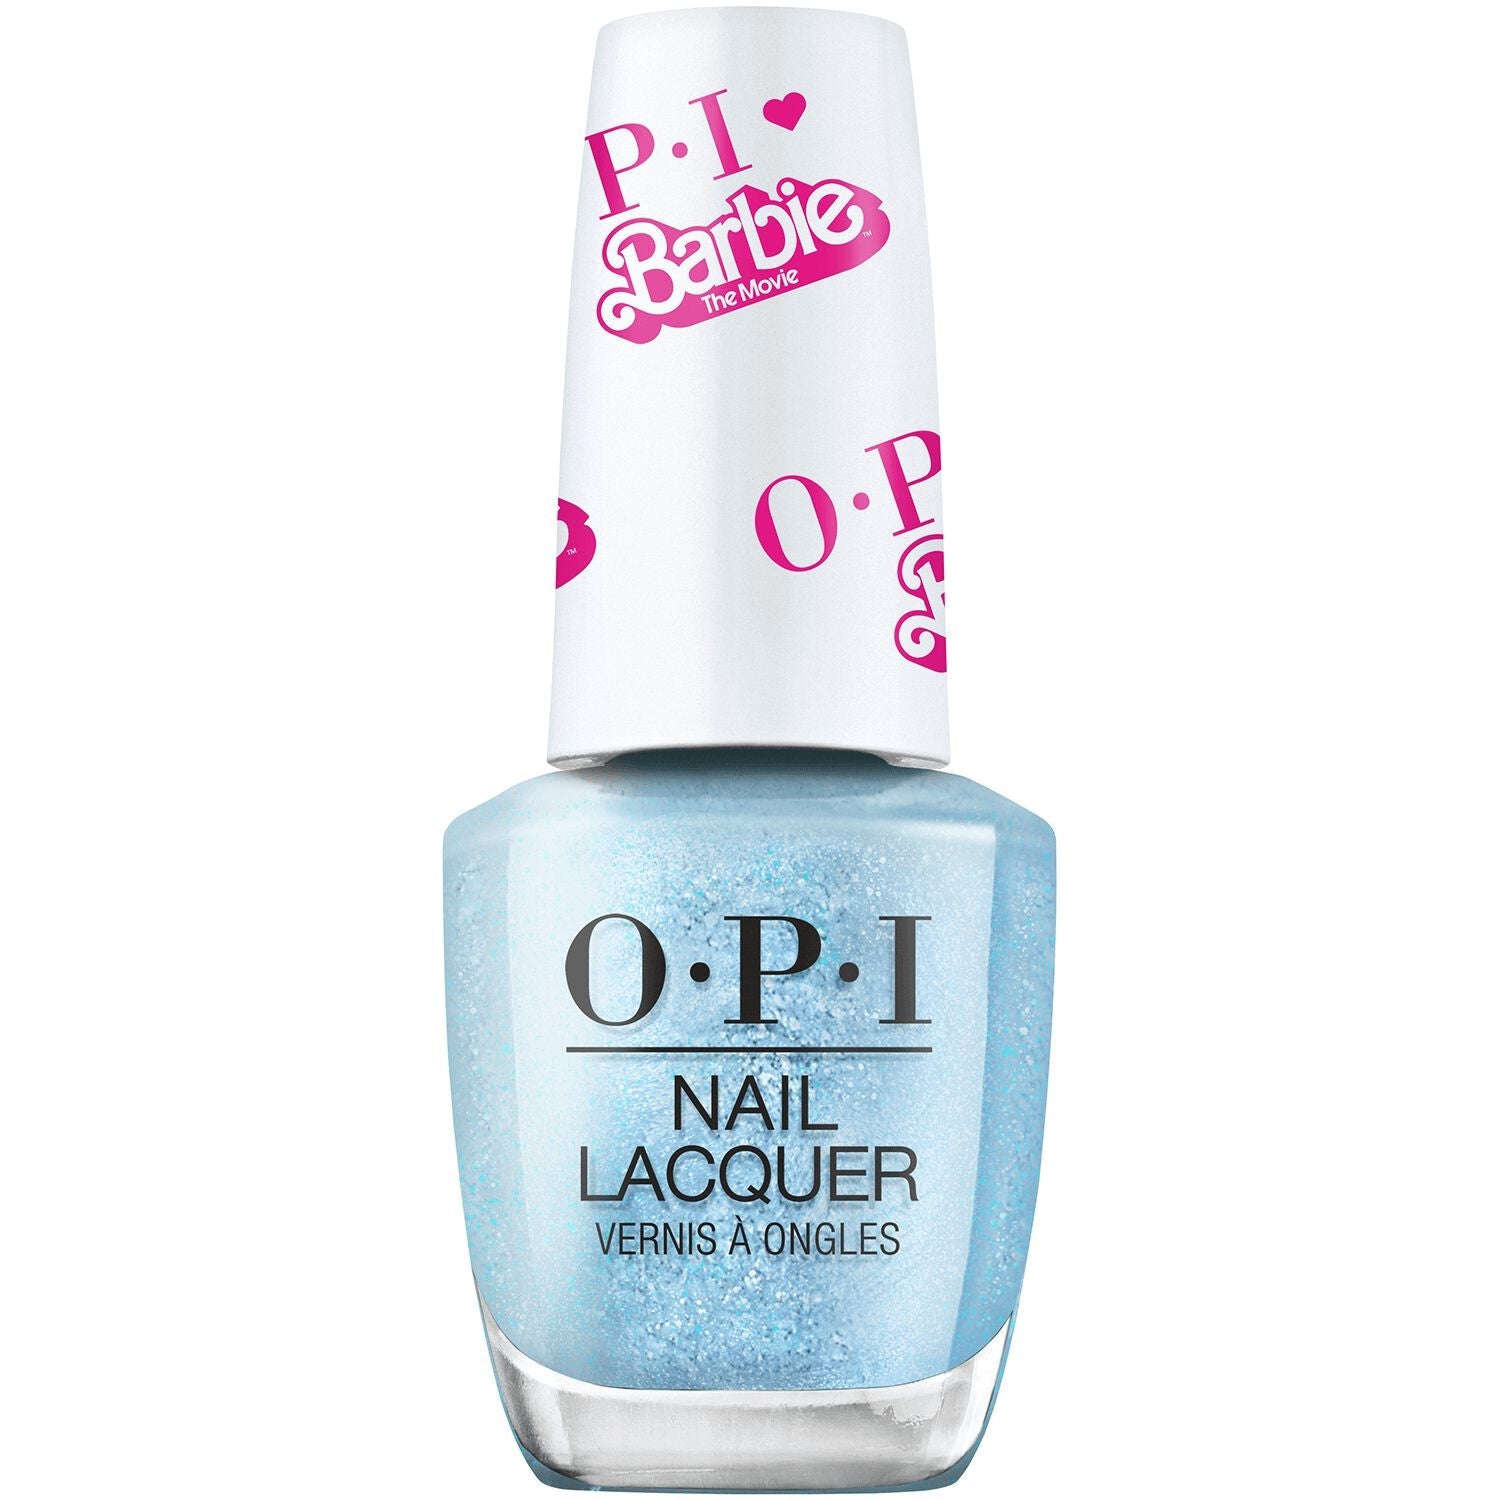 Ultimate Gel Nail Lacquer Step 1 (41196) Nail Polish – Make-Up | Oriflame  cosmetics